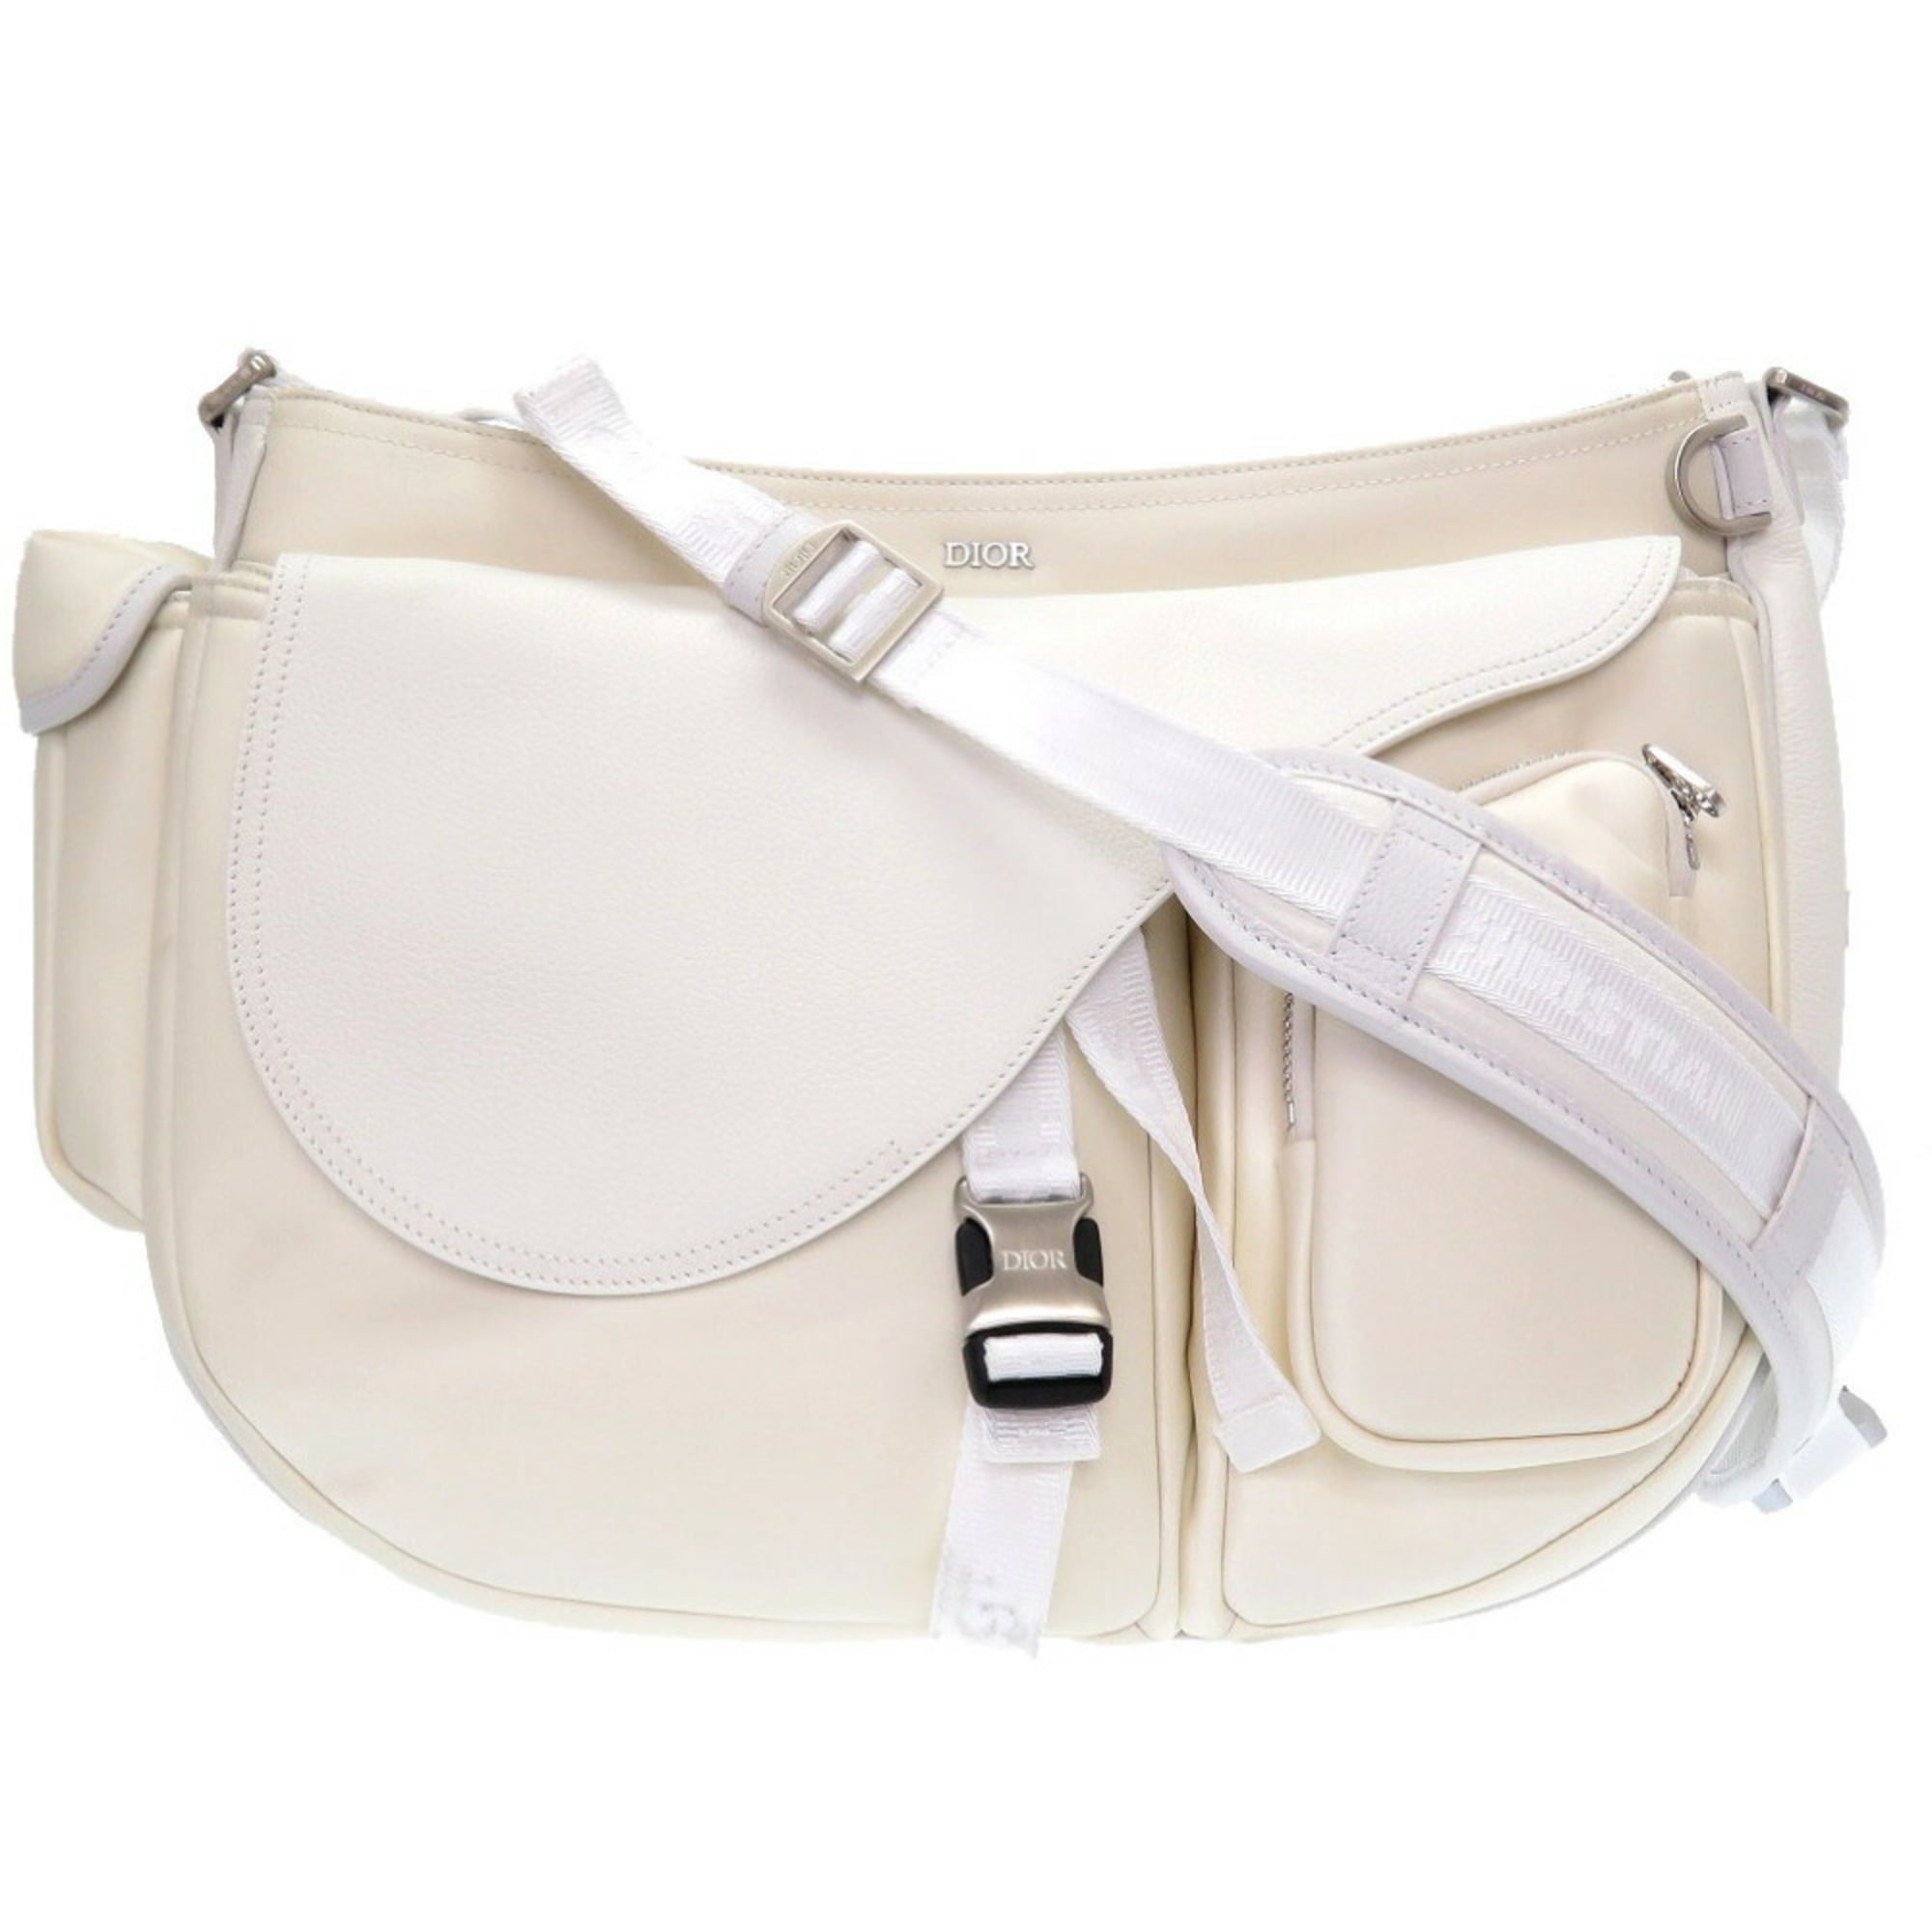 Dior Saddle Handbags  Mercari